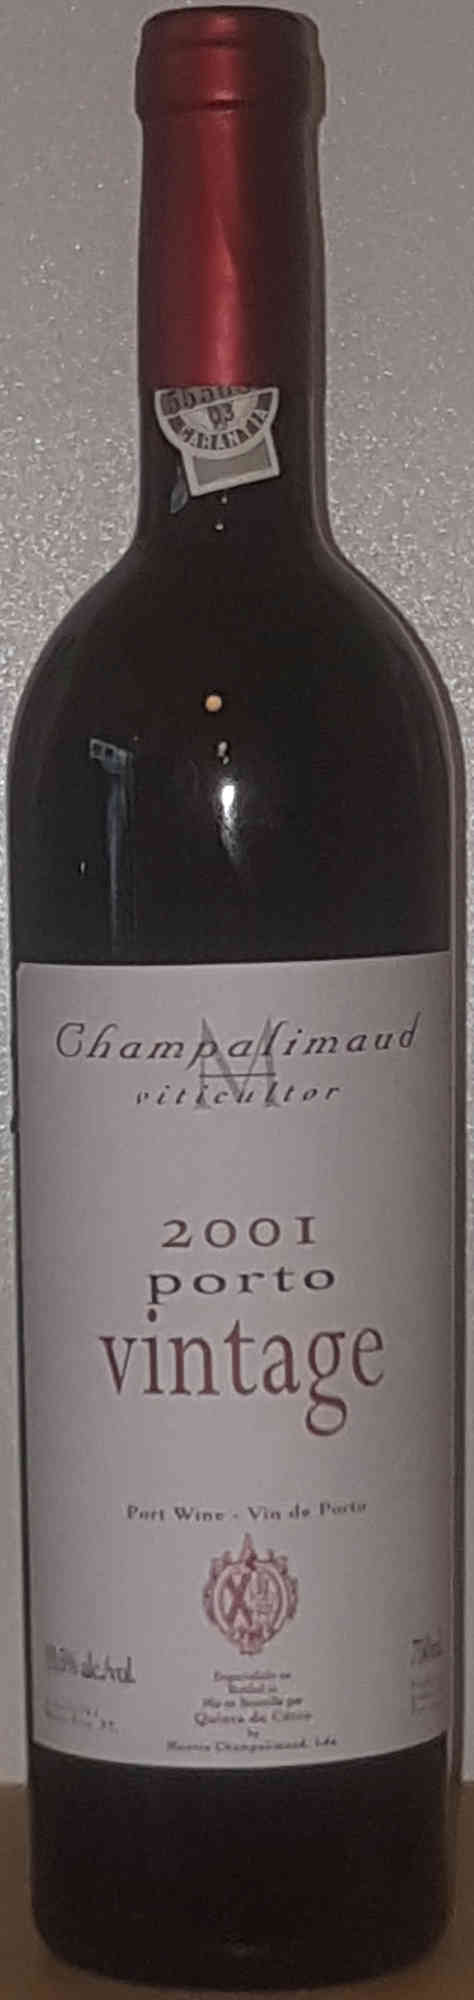 Champalimaud-Vintage-Port-2001